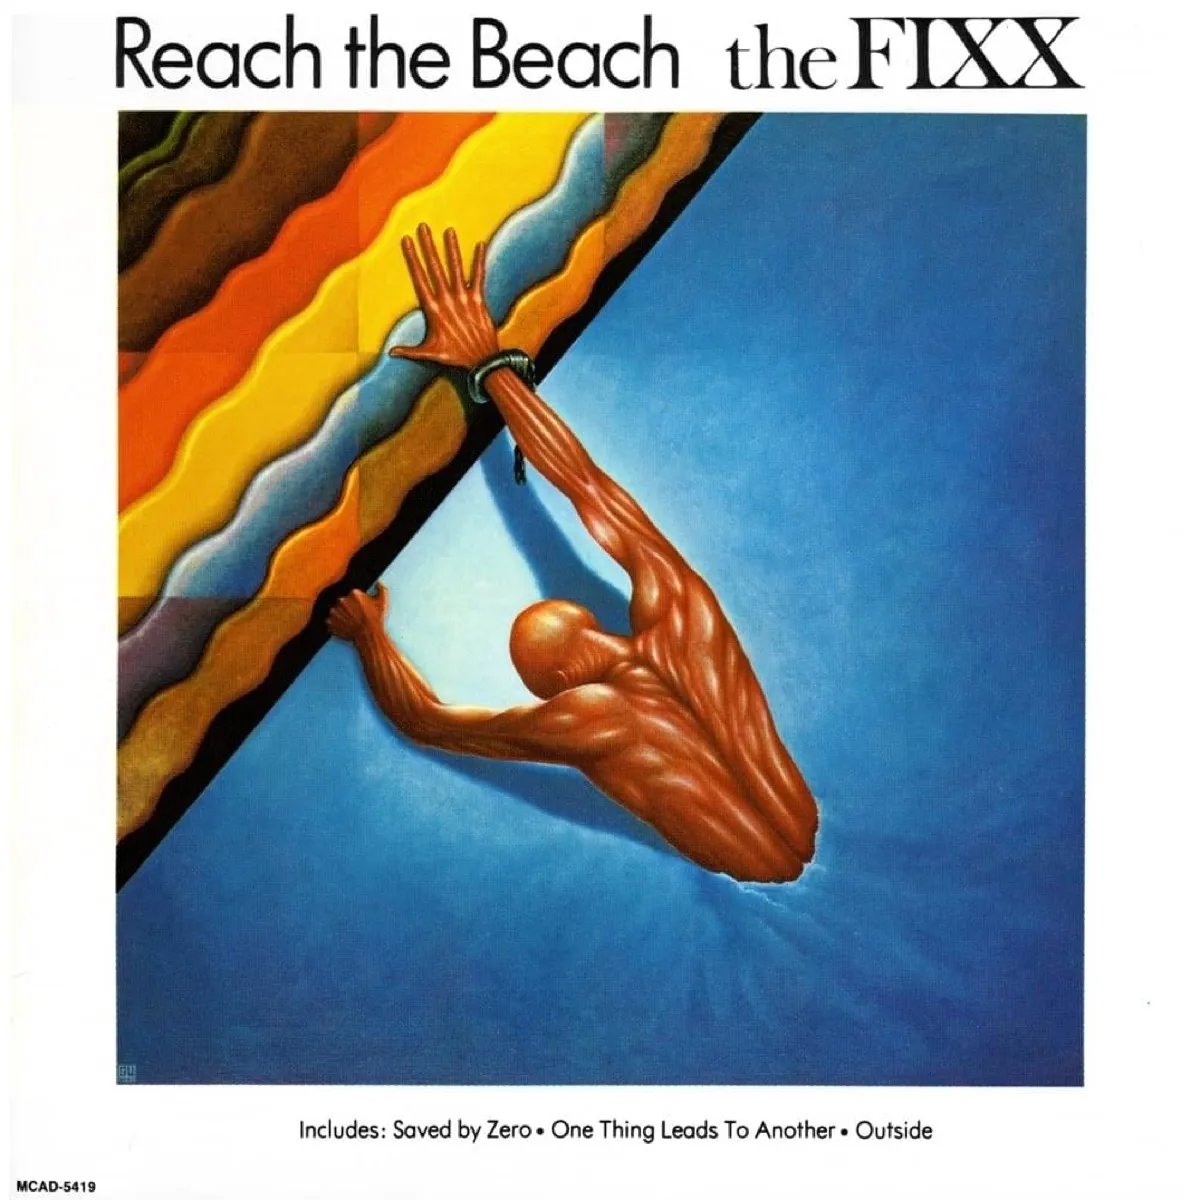 Reach the Beach by The Fixx album cover